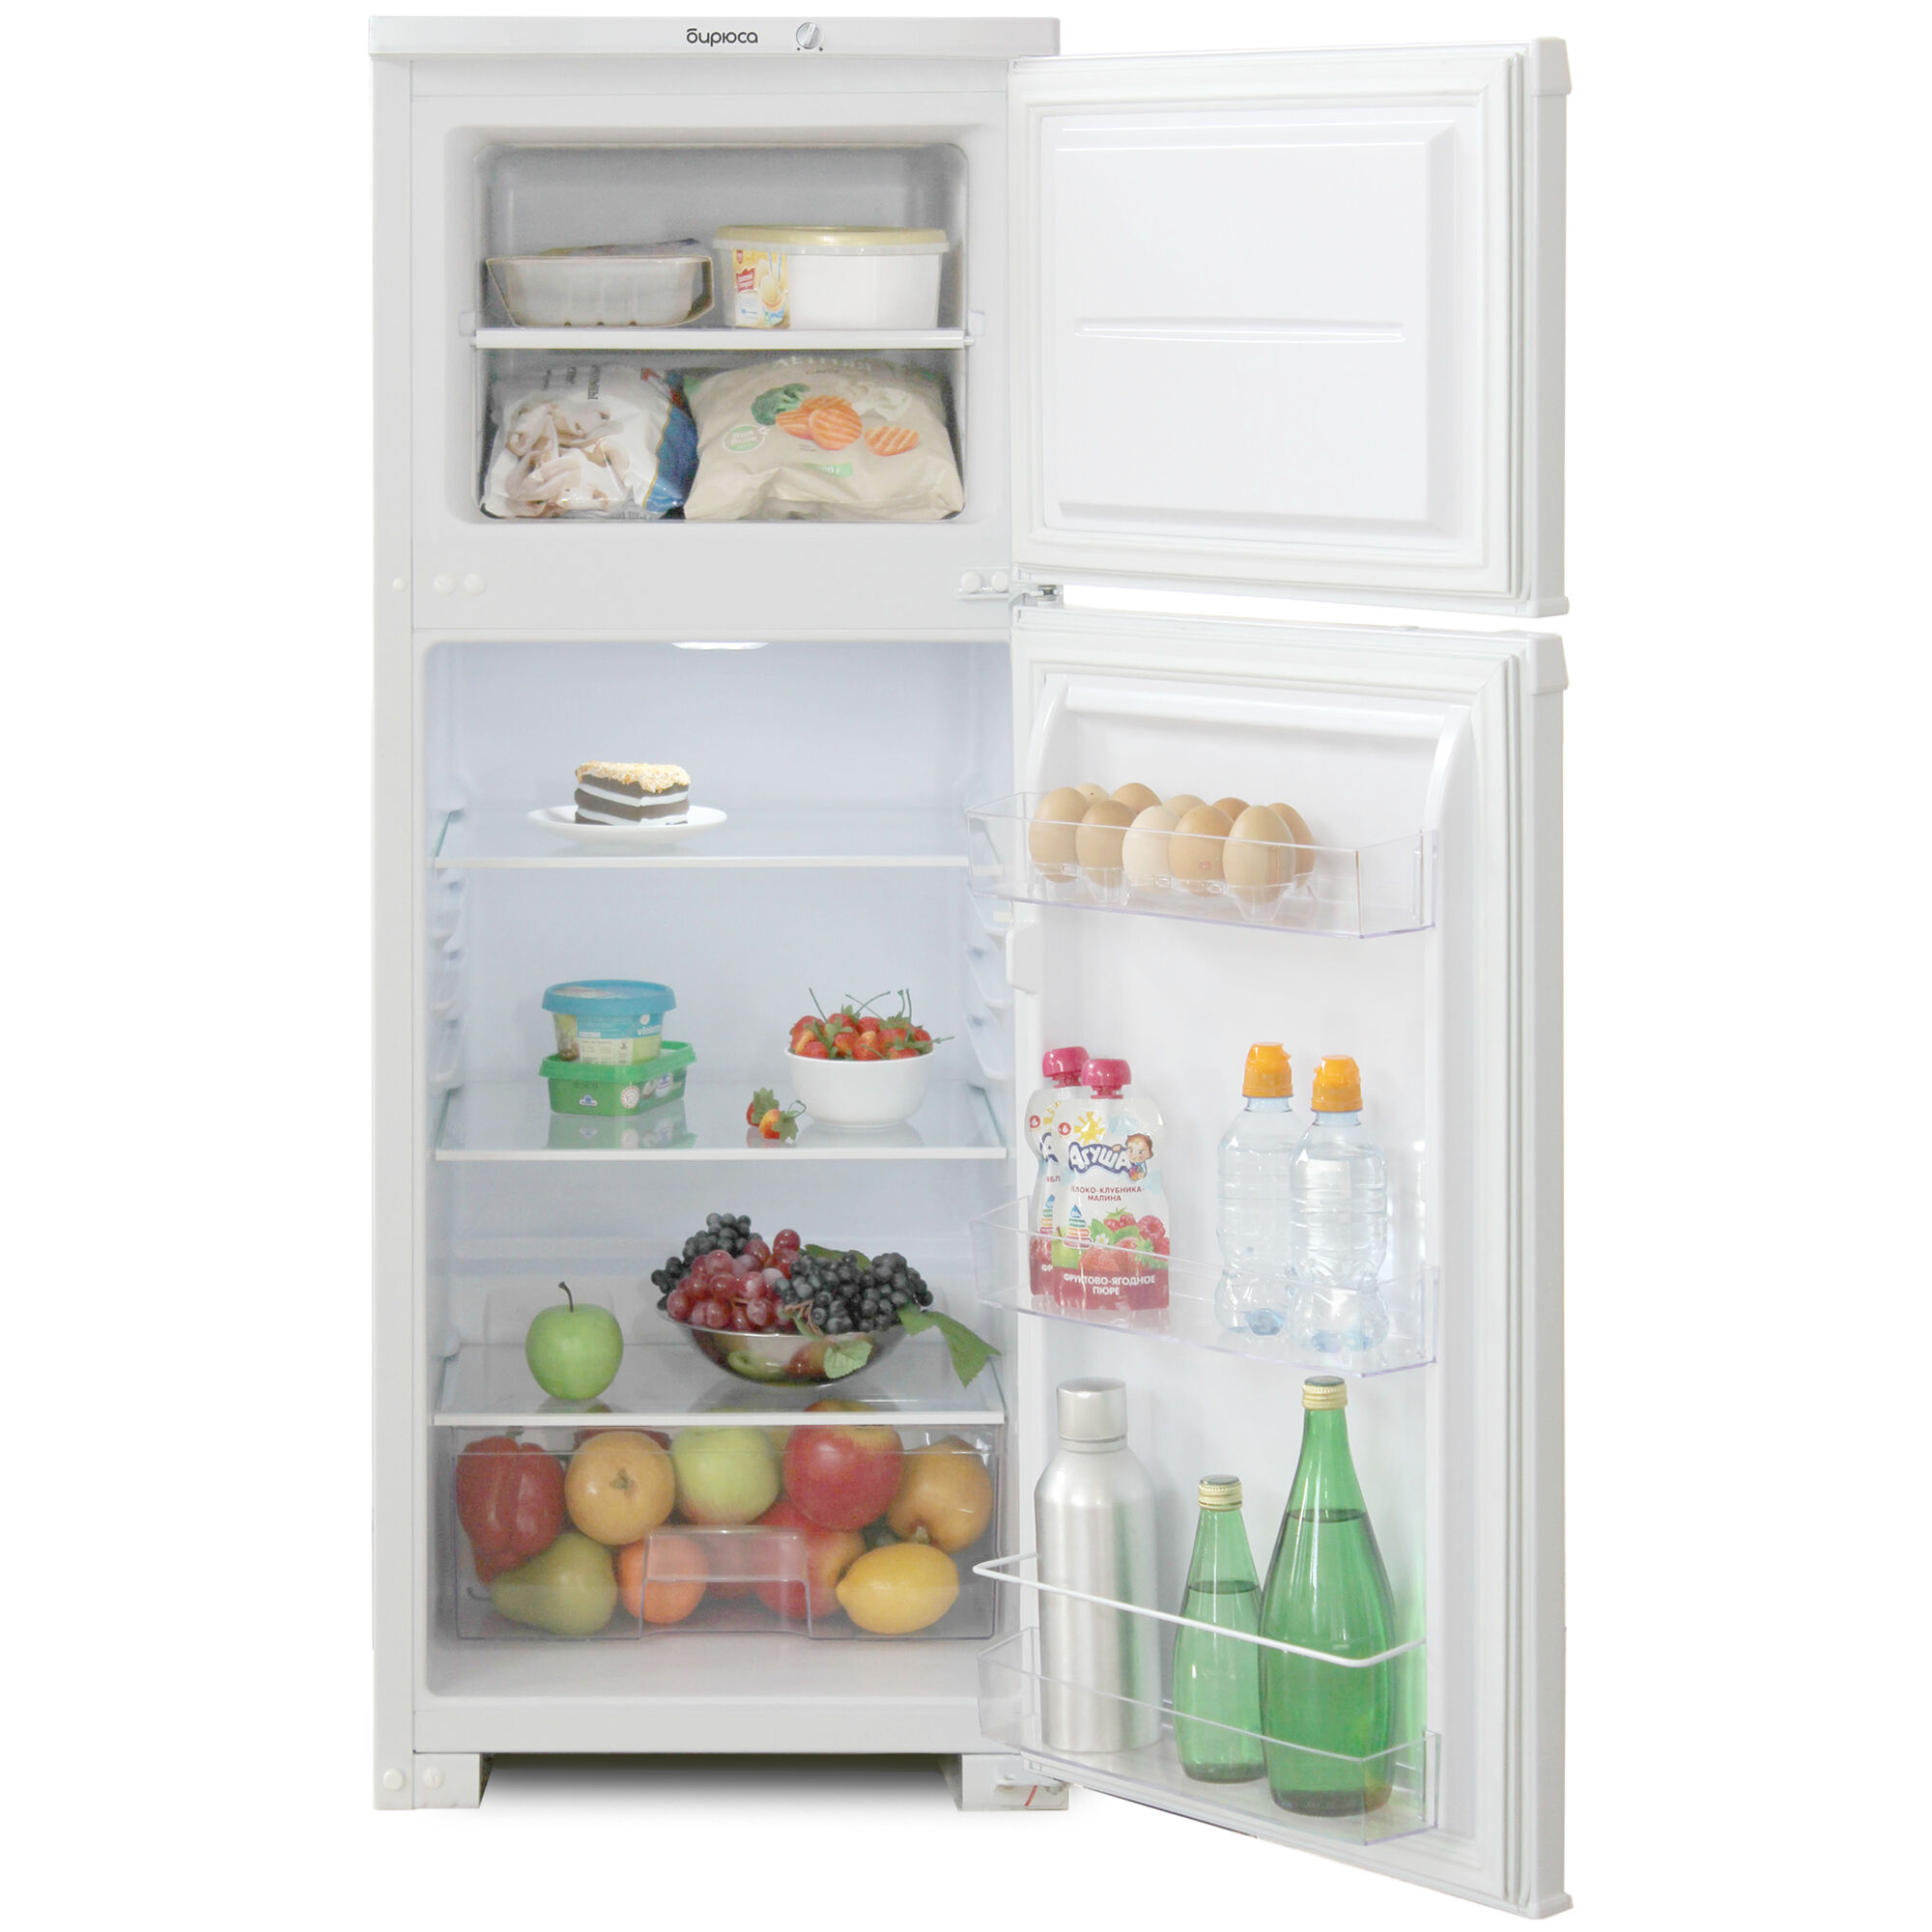 Холодильник Бирюса 122 узкий, двухкамерный